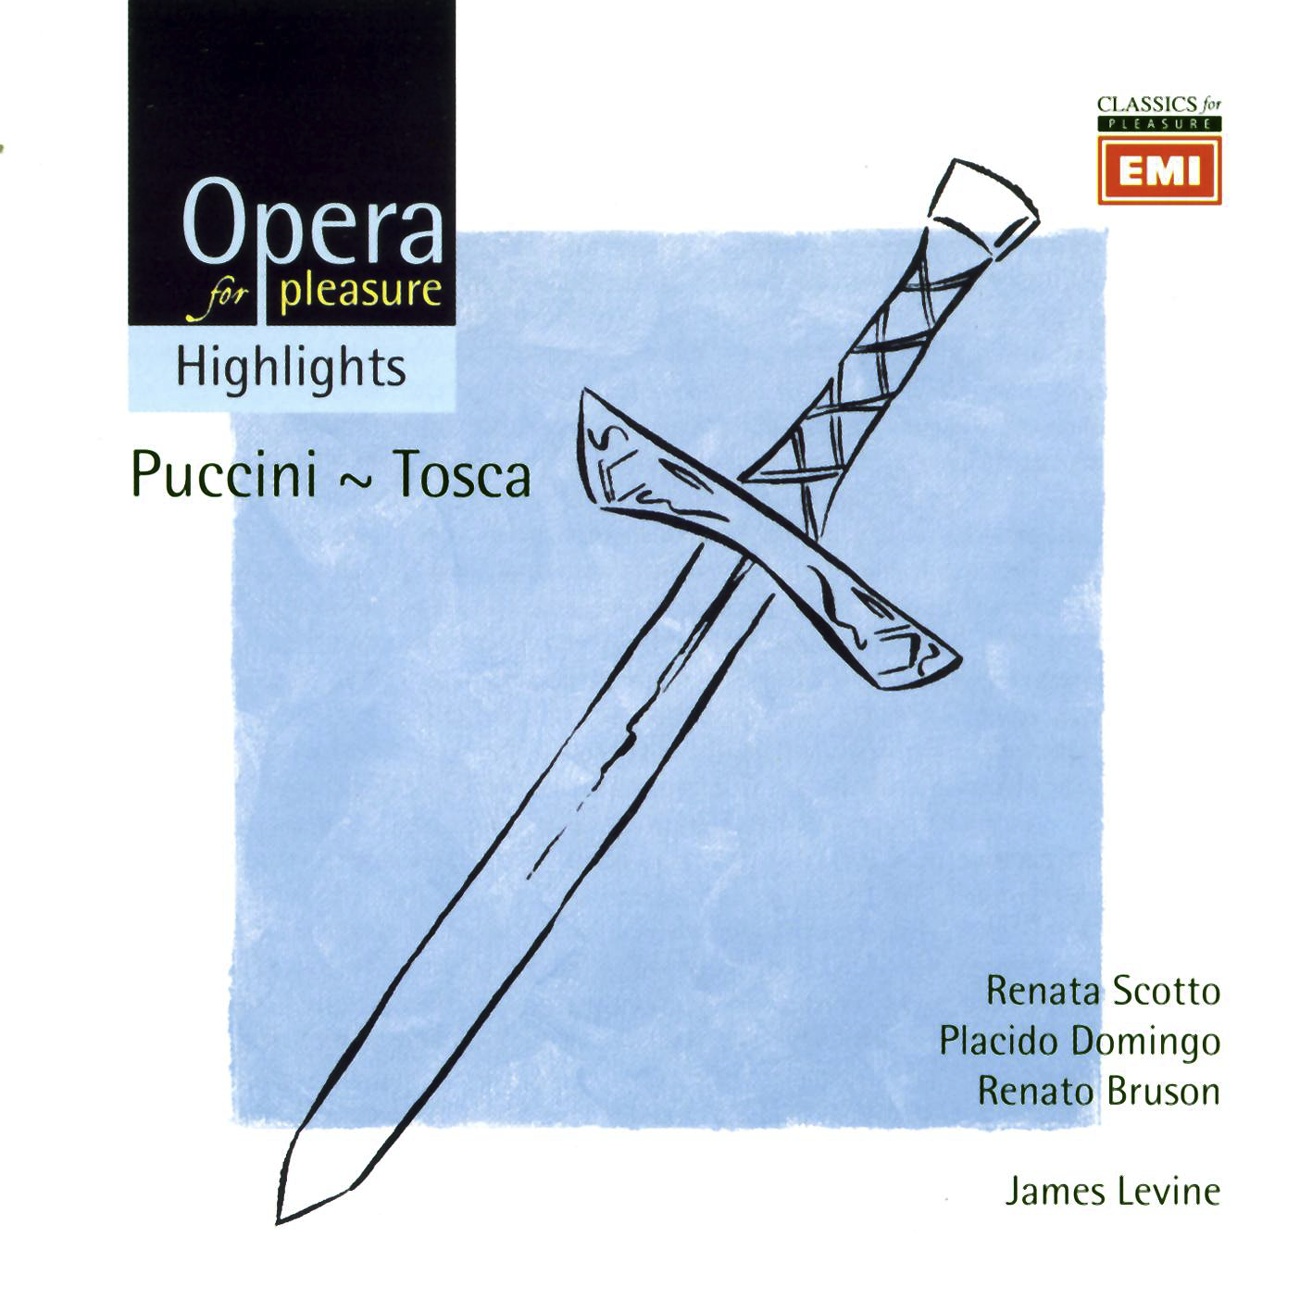 Tosca - Opera in three acts (1997 Digital Remaster), Act I: Ah, quegli occhi...Quale occhio al mondo (Tosca, Cavaradossi)